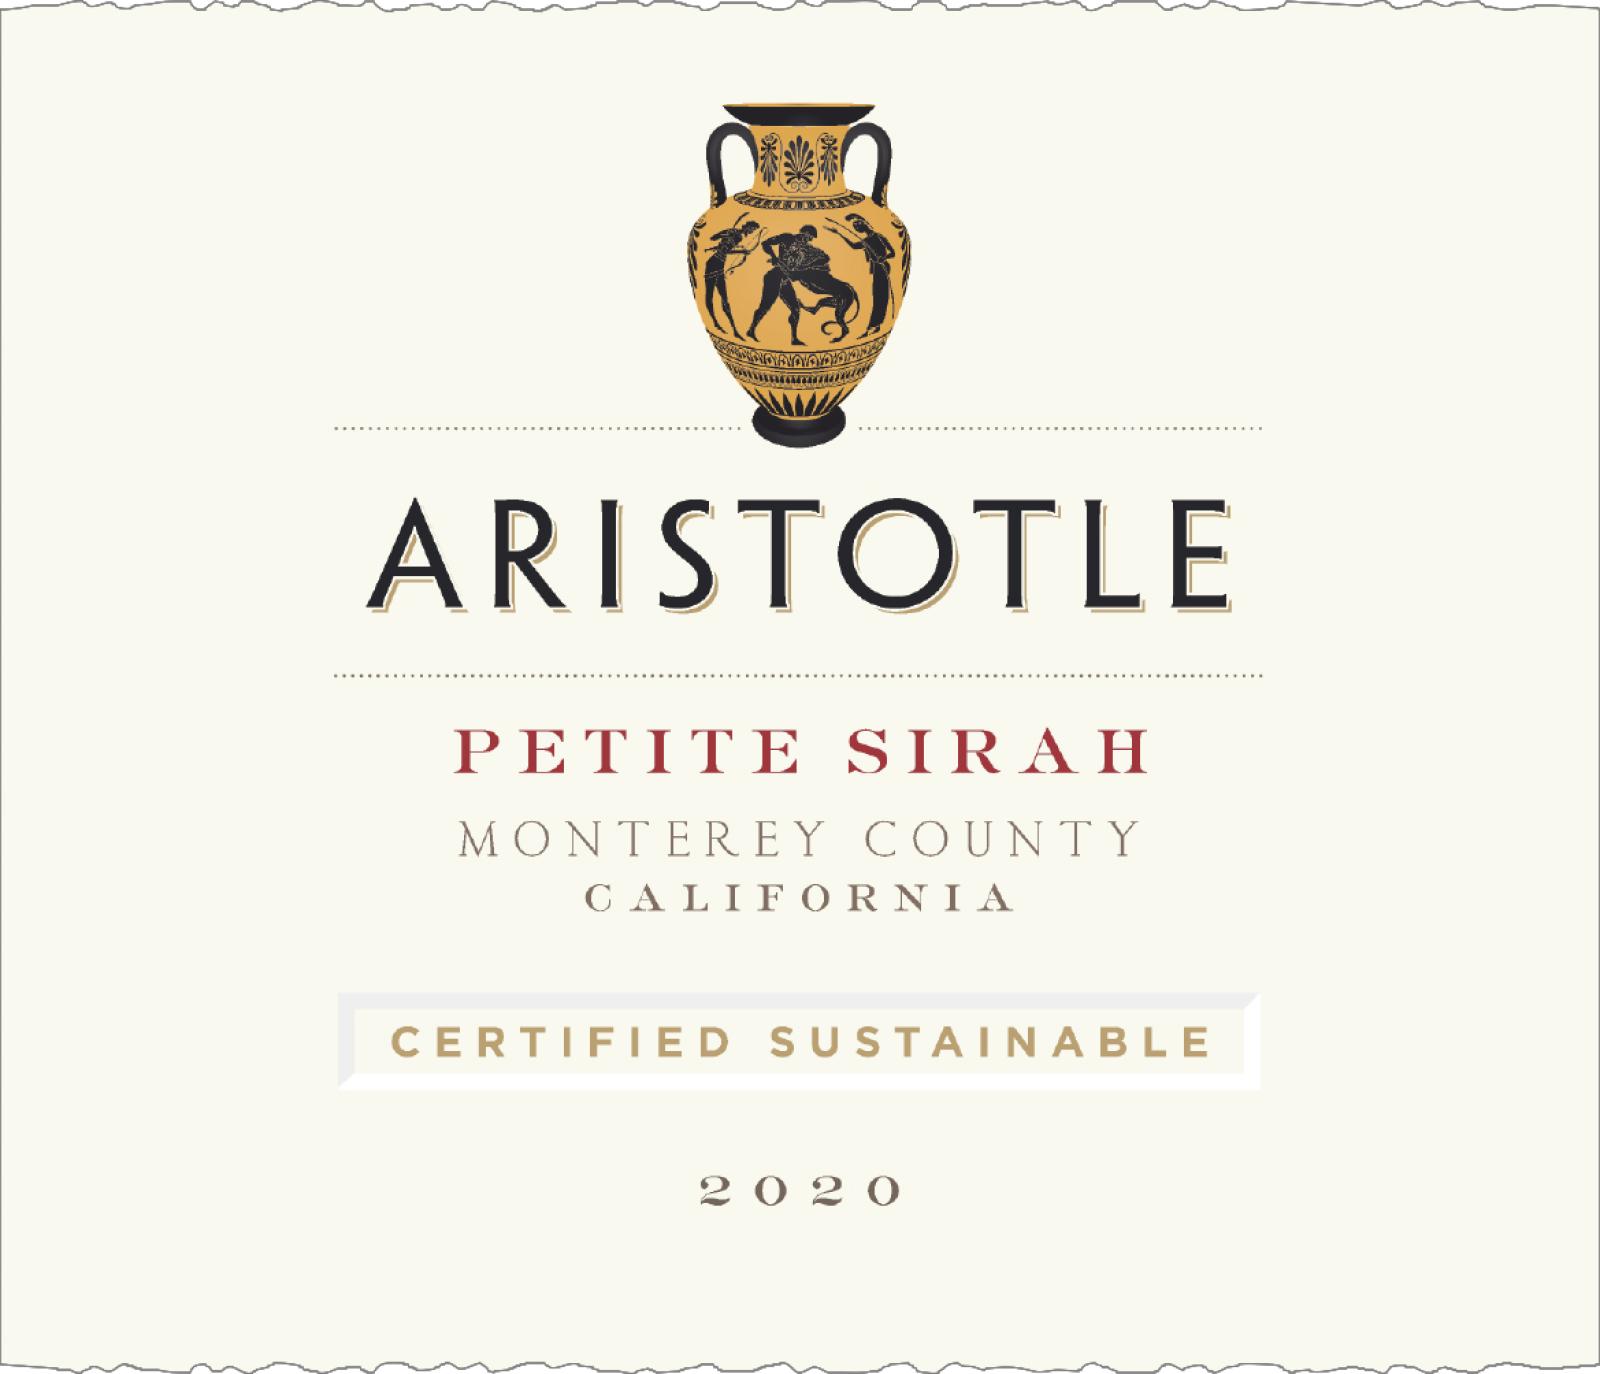 Aristotle Petite Sirah 2020